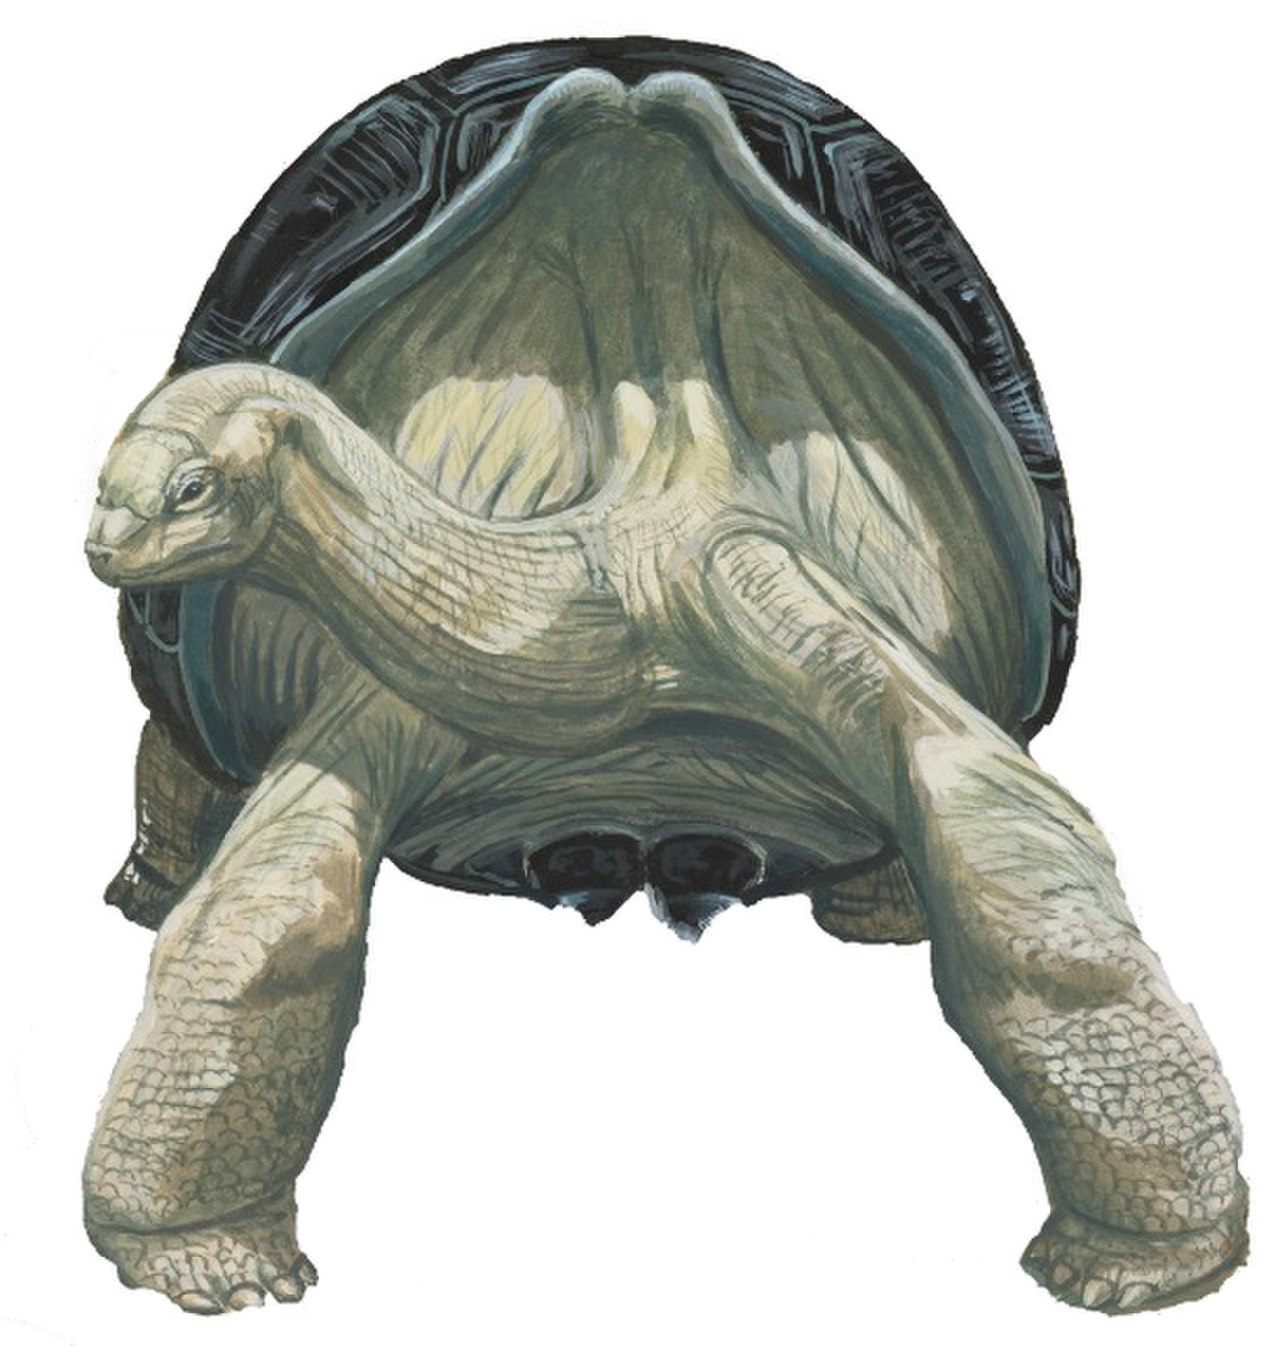 Giant tortoise shell terraria фото 49